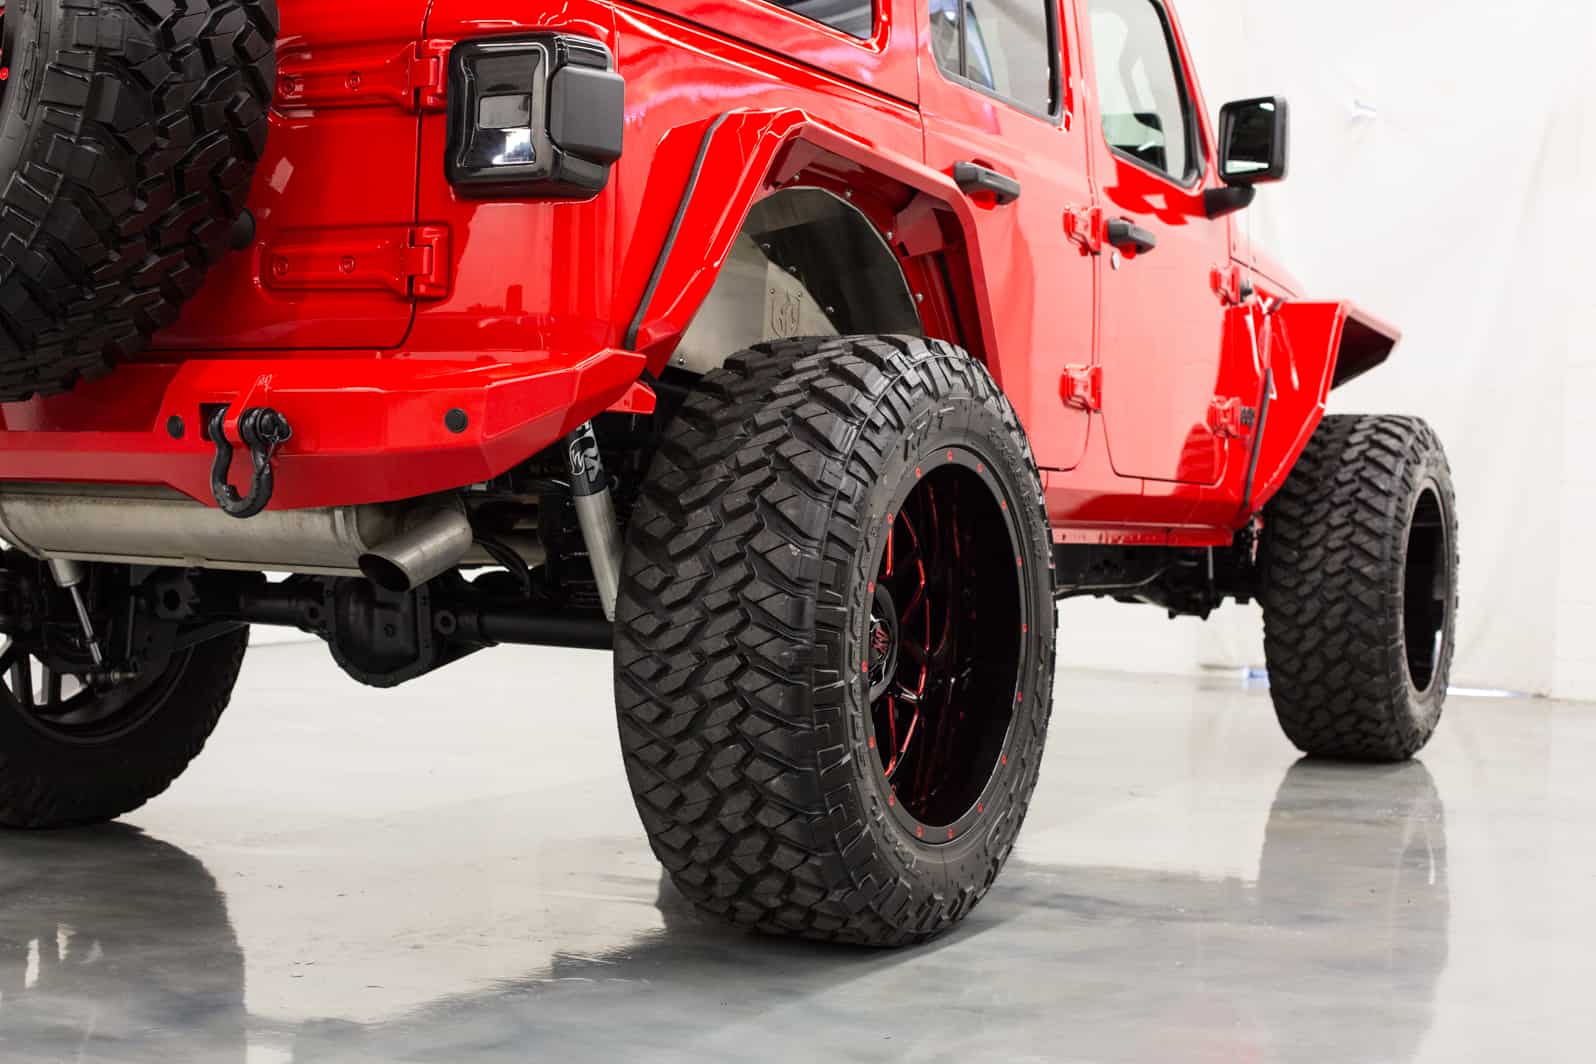 Quiet Tires for Jeep Wrangler